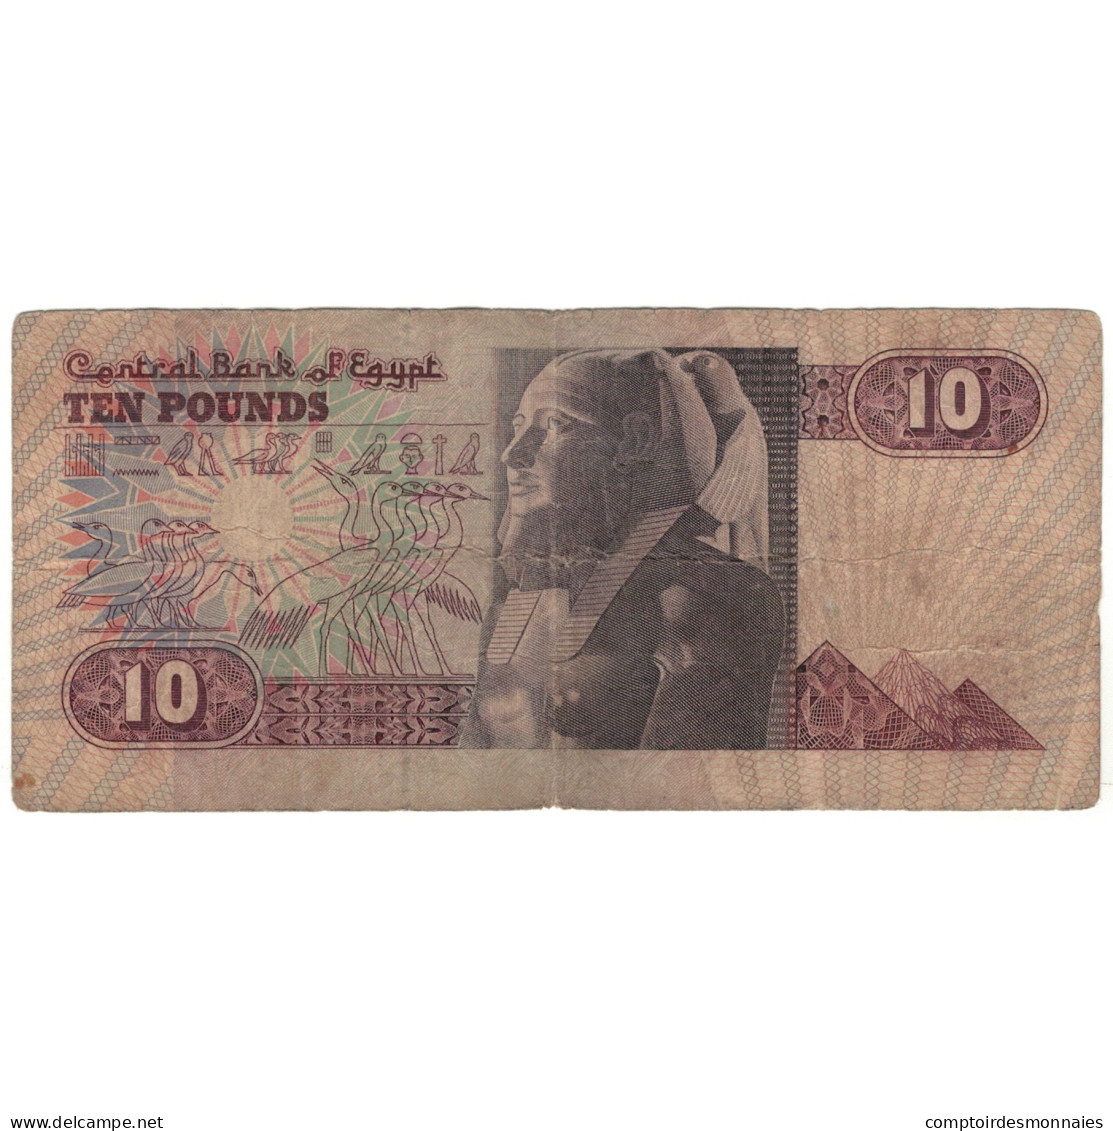 Billet, Égypte, 10 Pounds, KM:51, B - Egipto